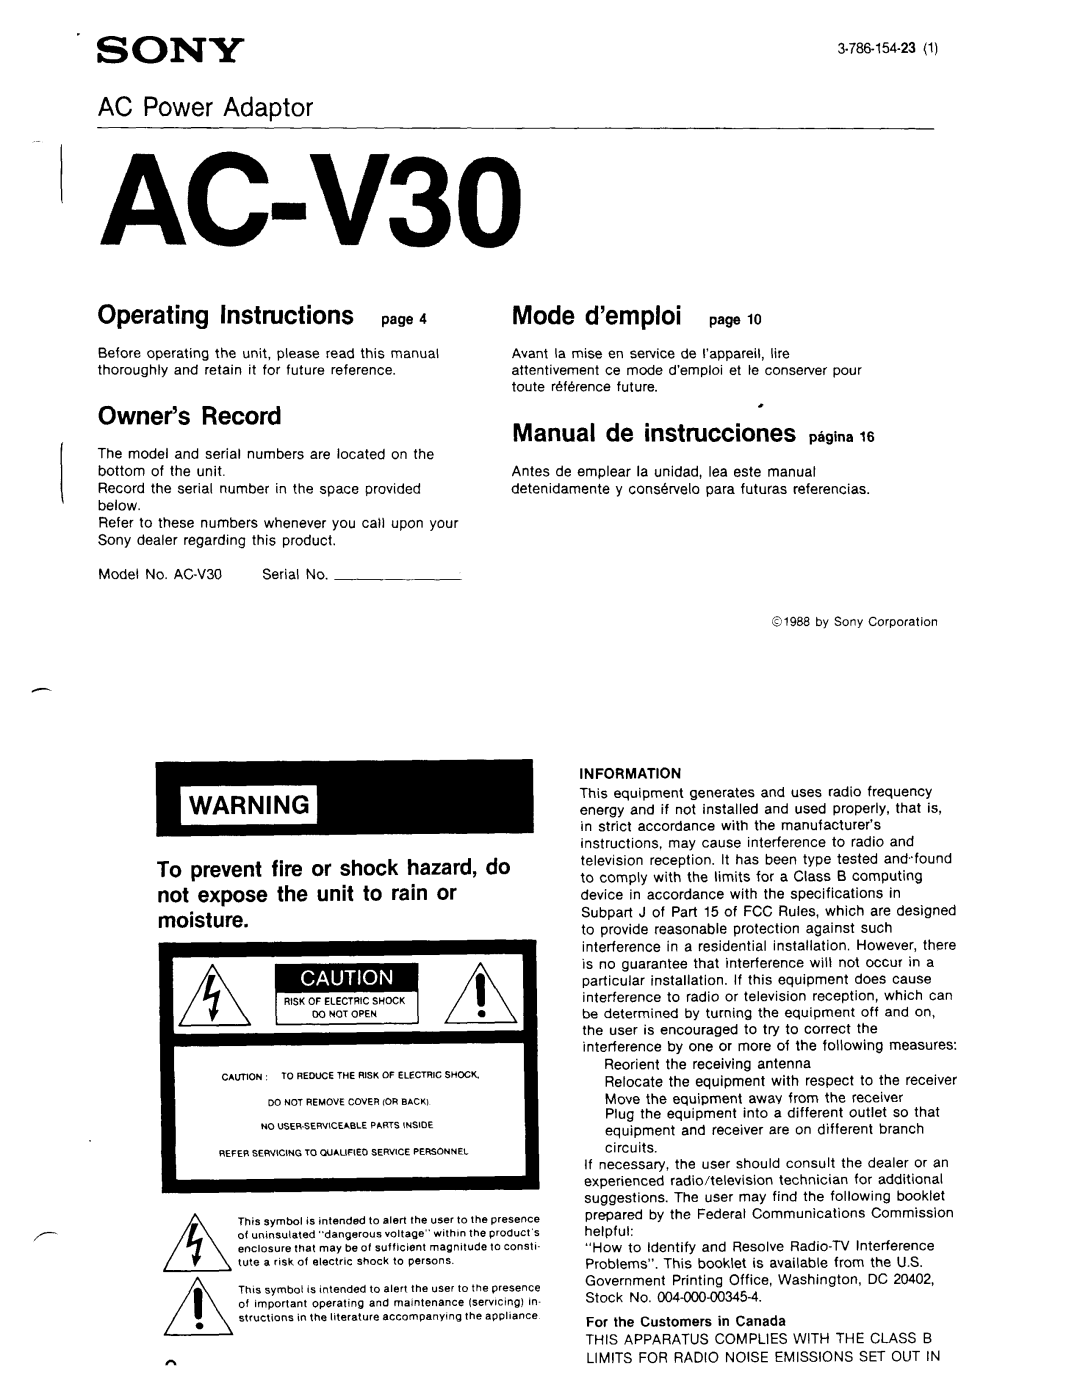 Sony AC-V30 manual 